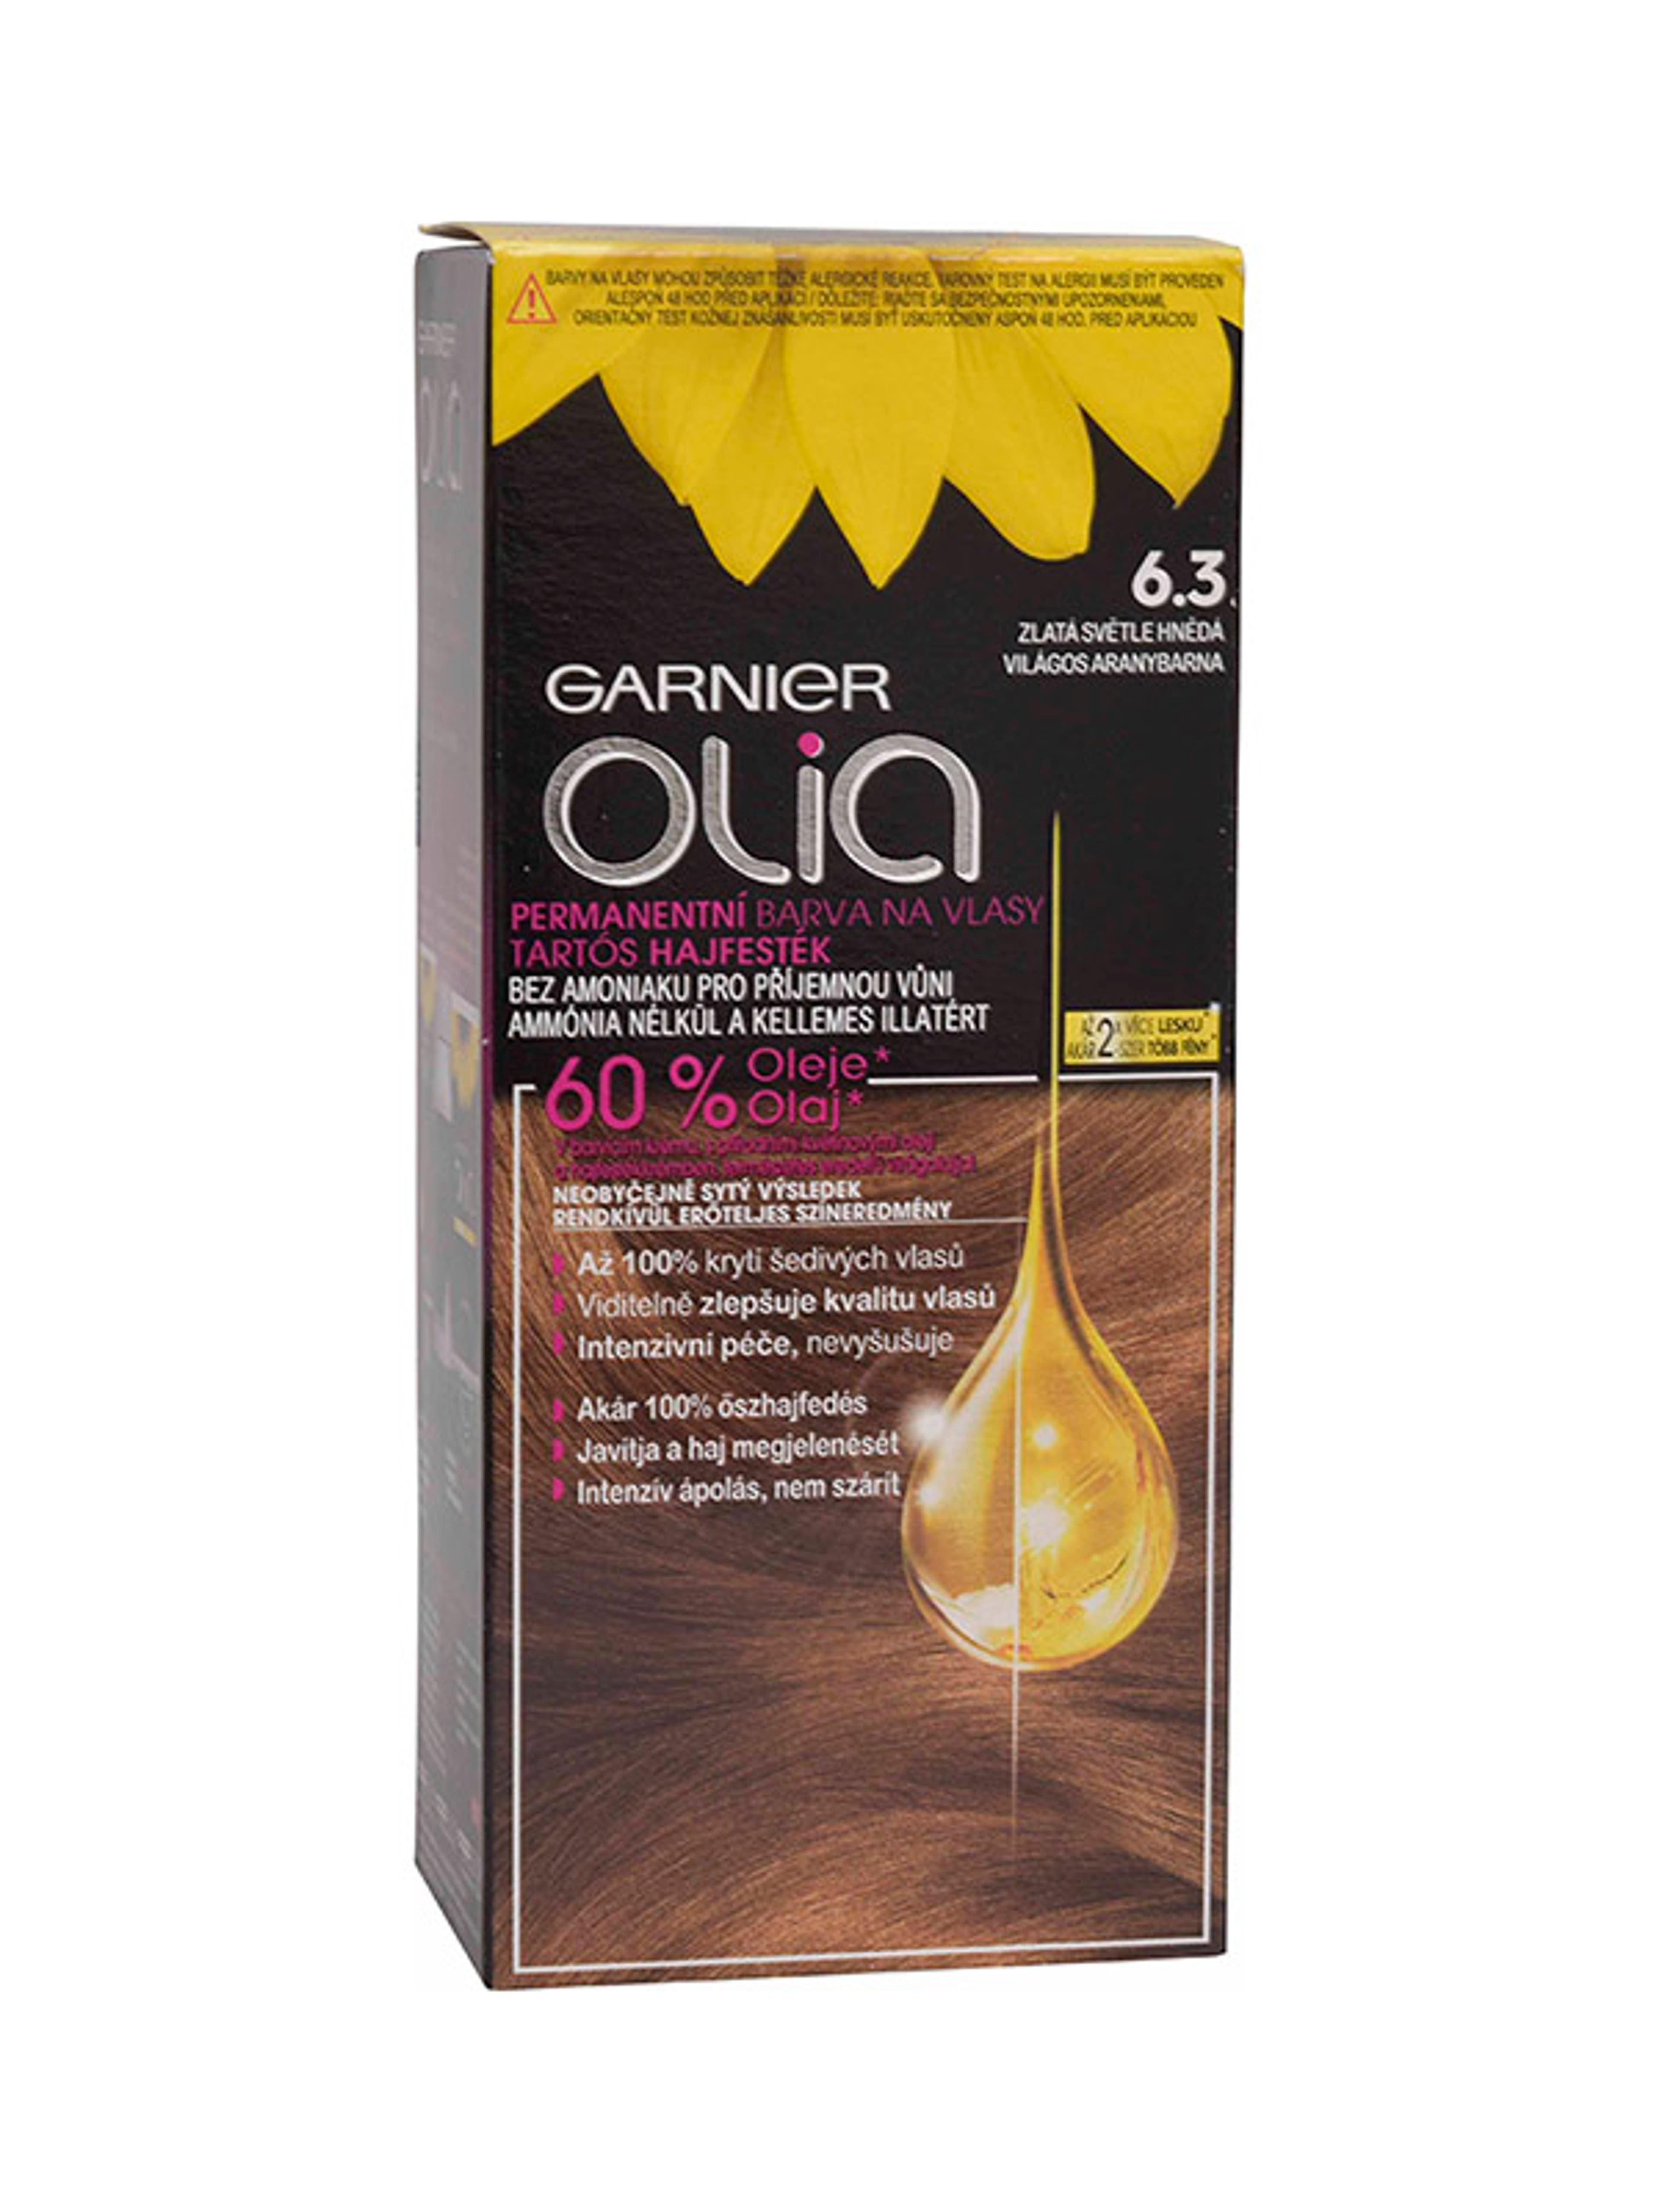 Garnier Olia tartós hajfesték 6.3 Világos aranybarna - 1 db